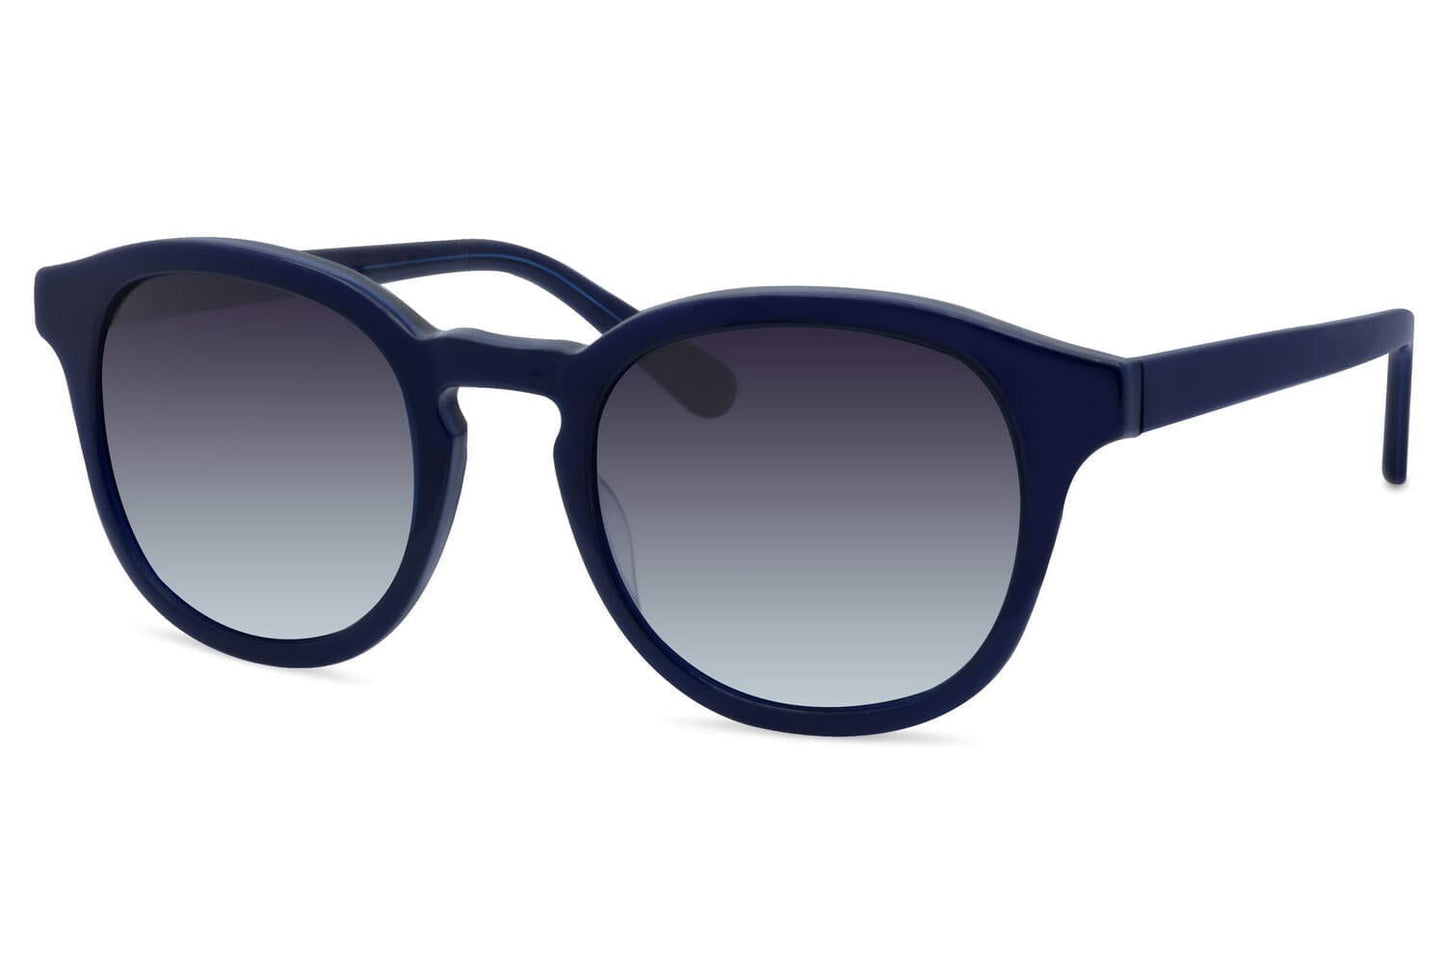 Keyhole sunglasses. Black sunglasses. Dark lenses. UV400 protected.